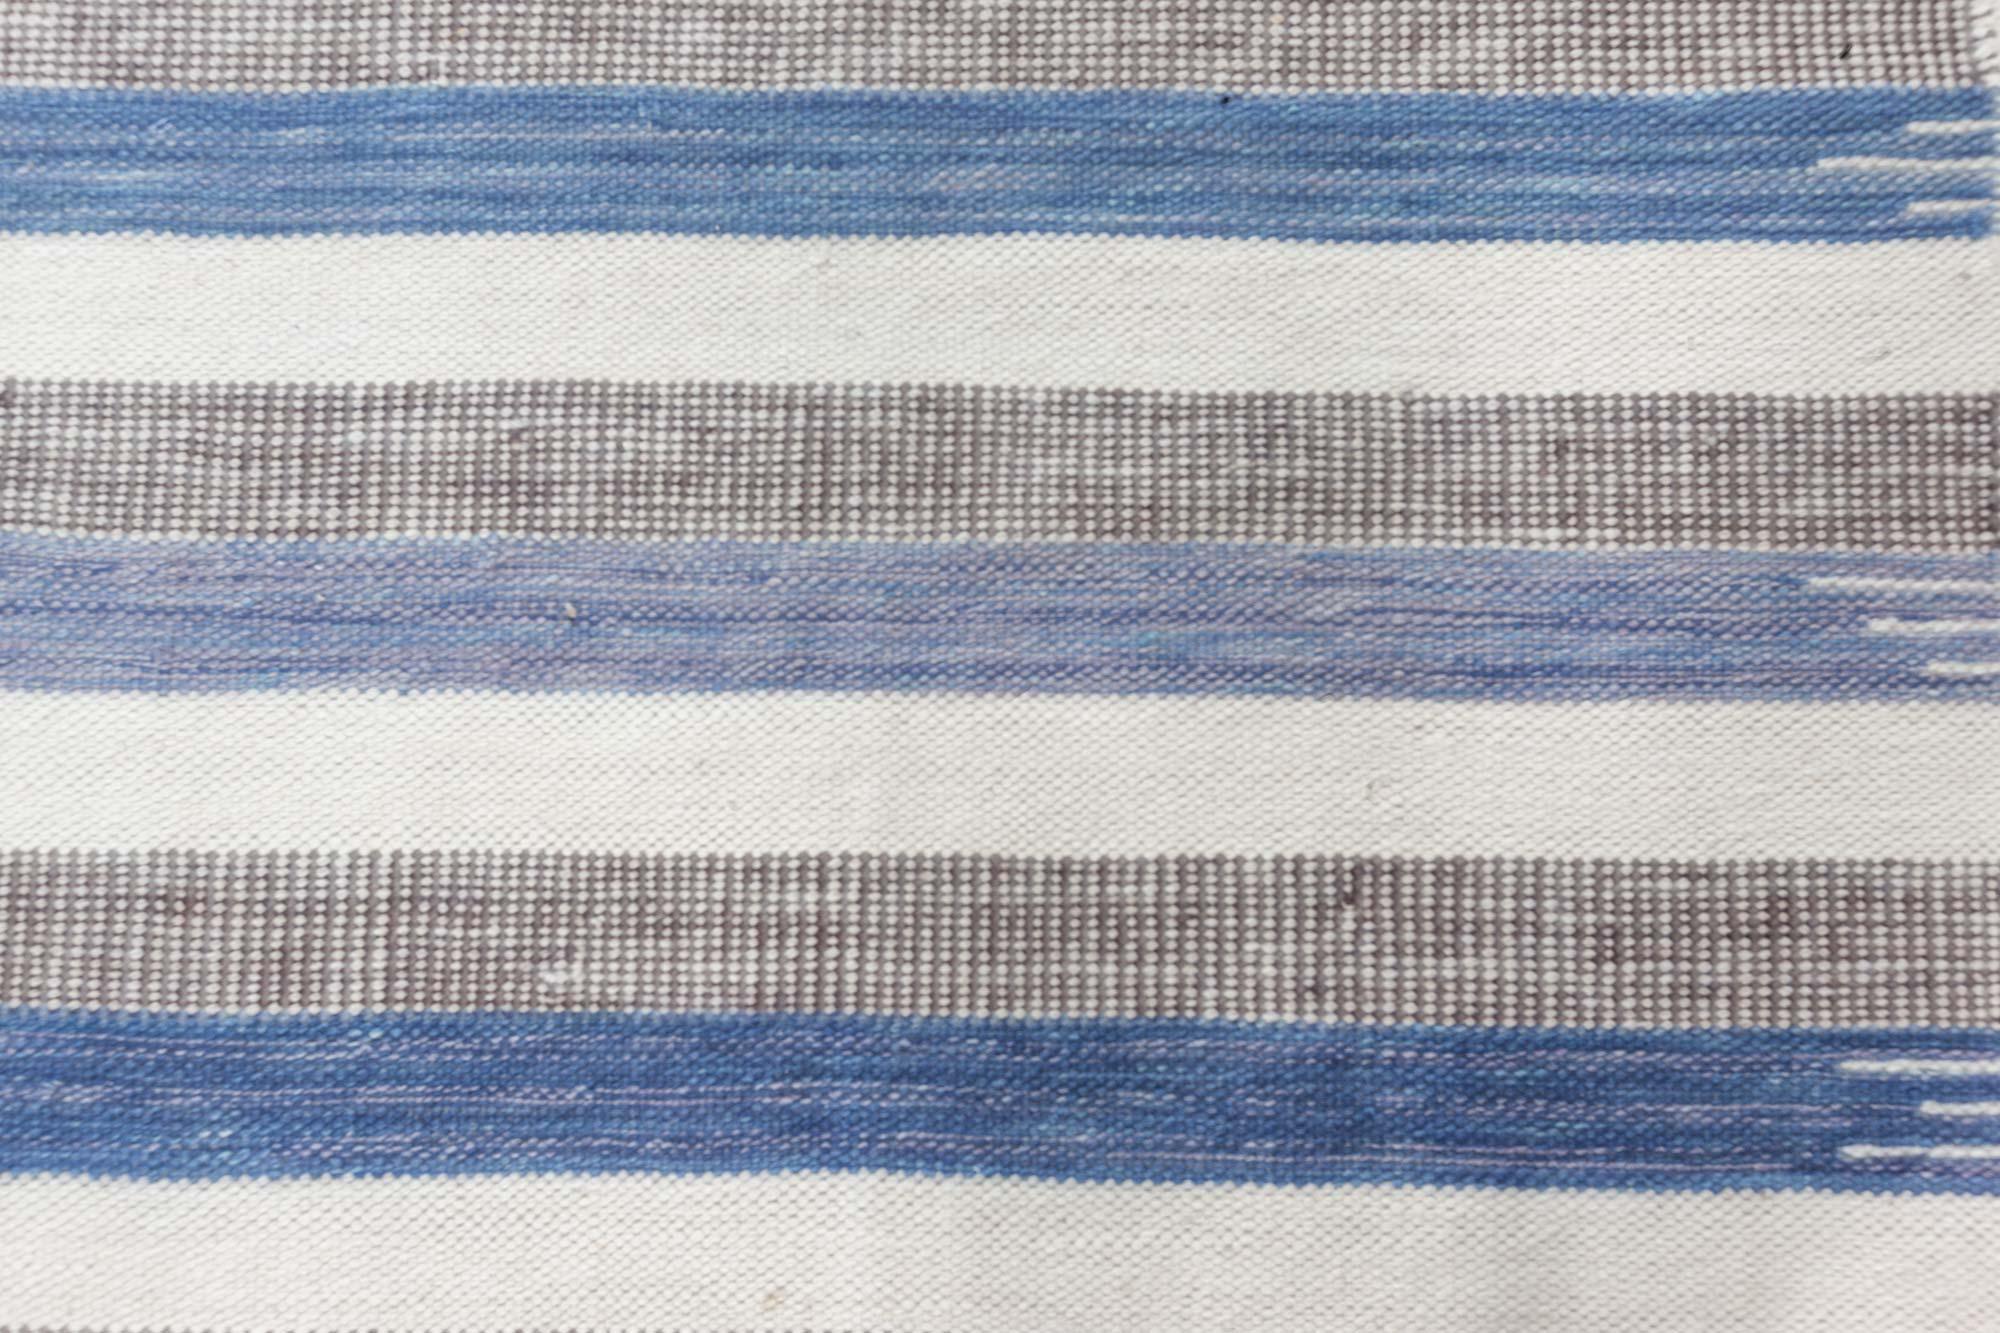 Contemporary swedish striped rug by Doris Leslie Blau
Size: 4'2